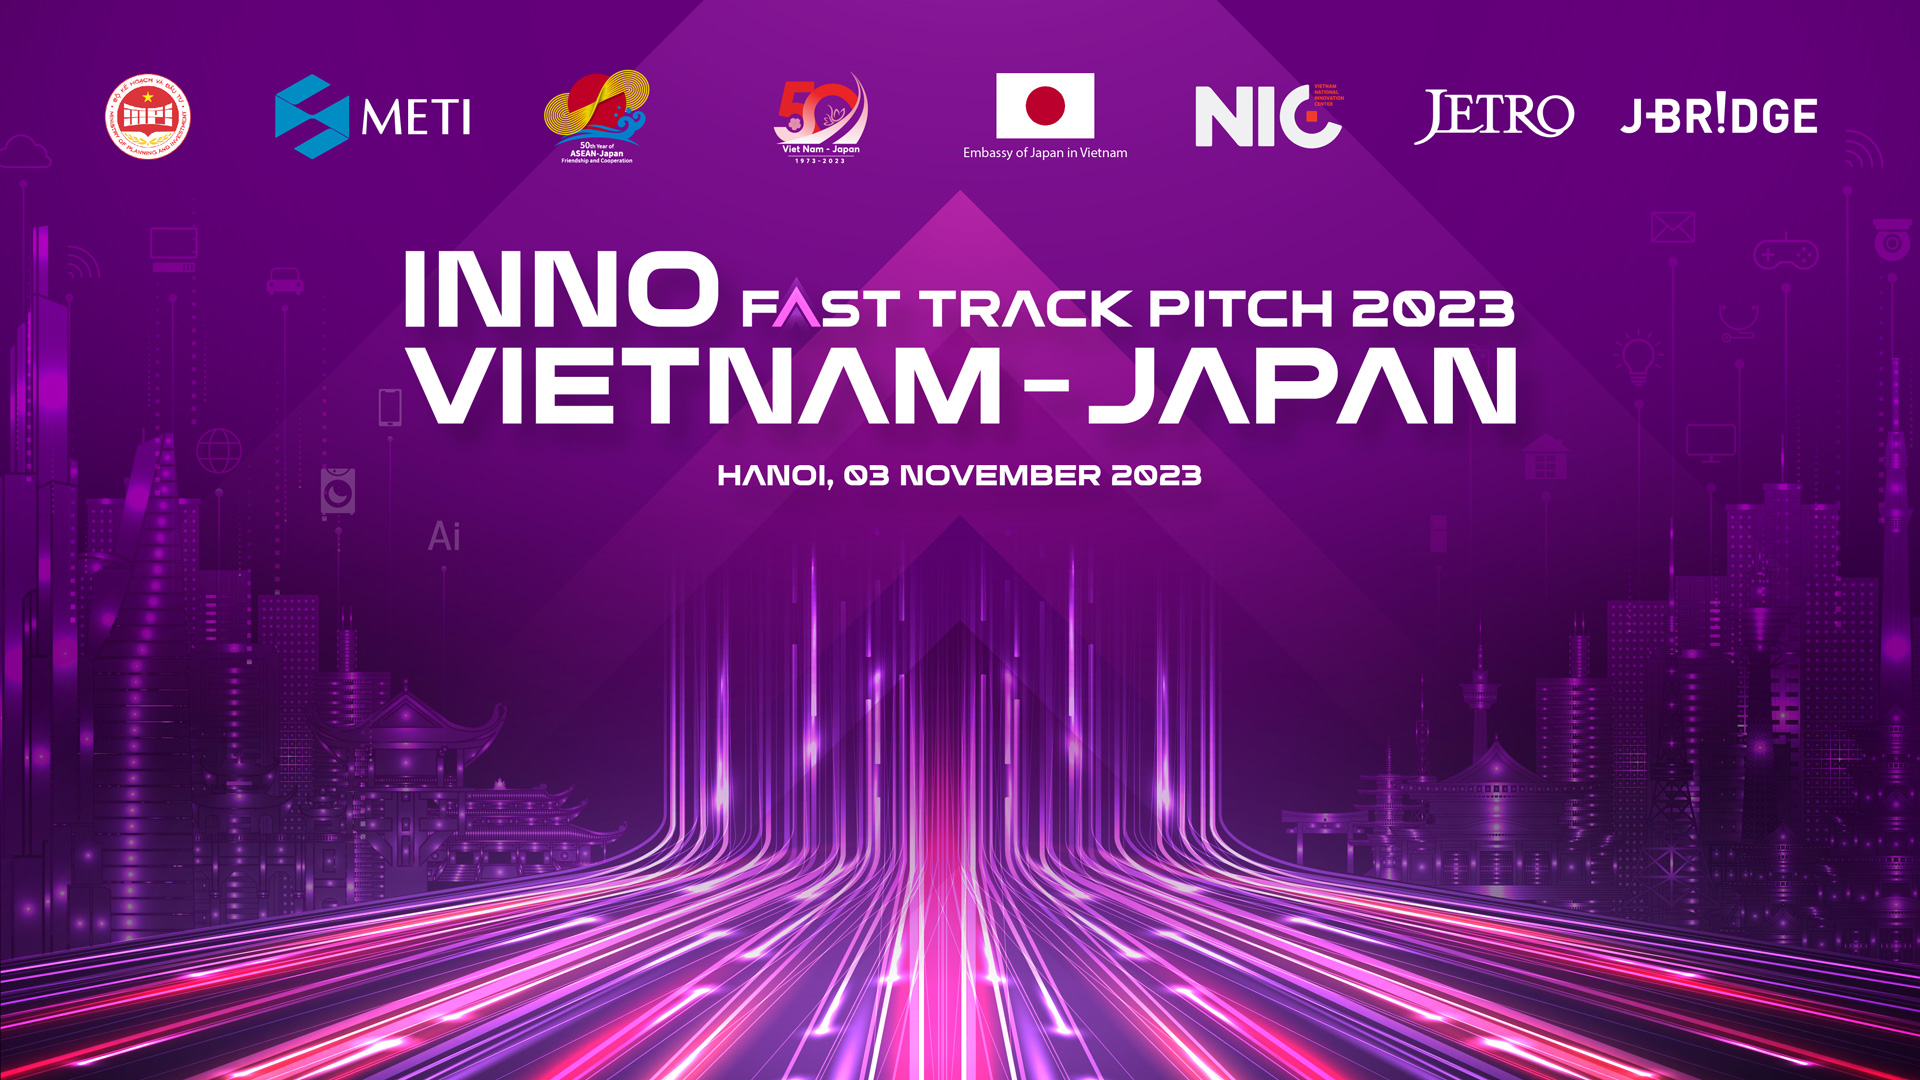 Inno Vietnam-Japan Fast Track Pitch 2023